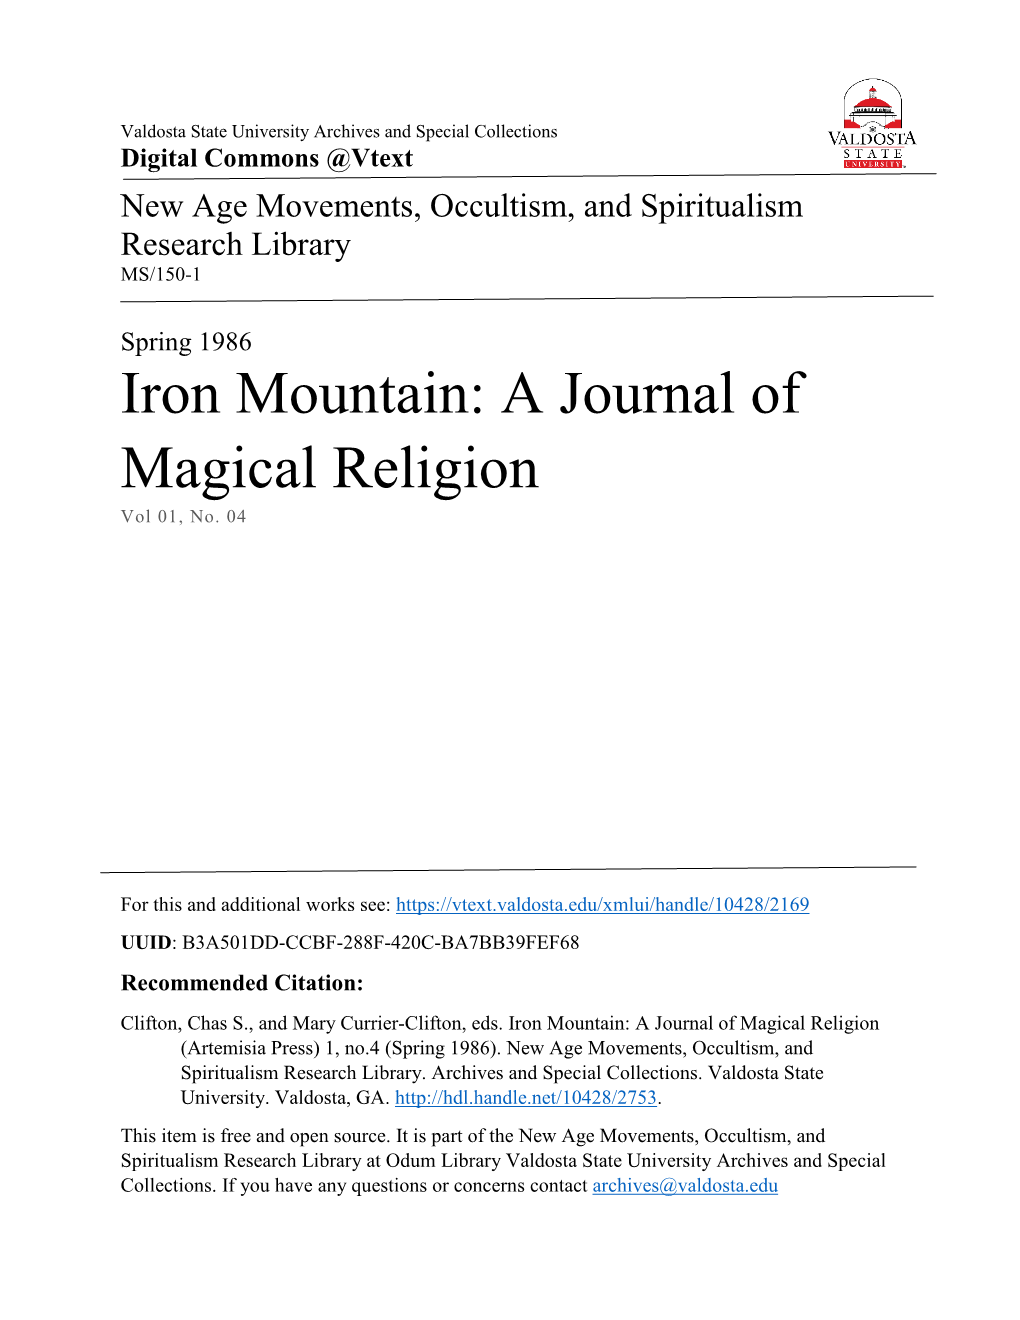 Iron Mountain: a Journal of Magical Religion Vol 01, No